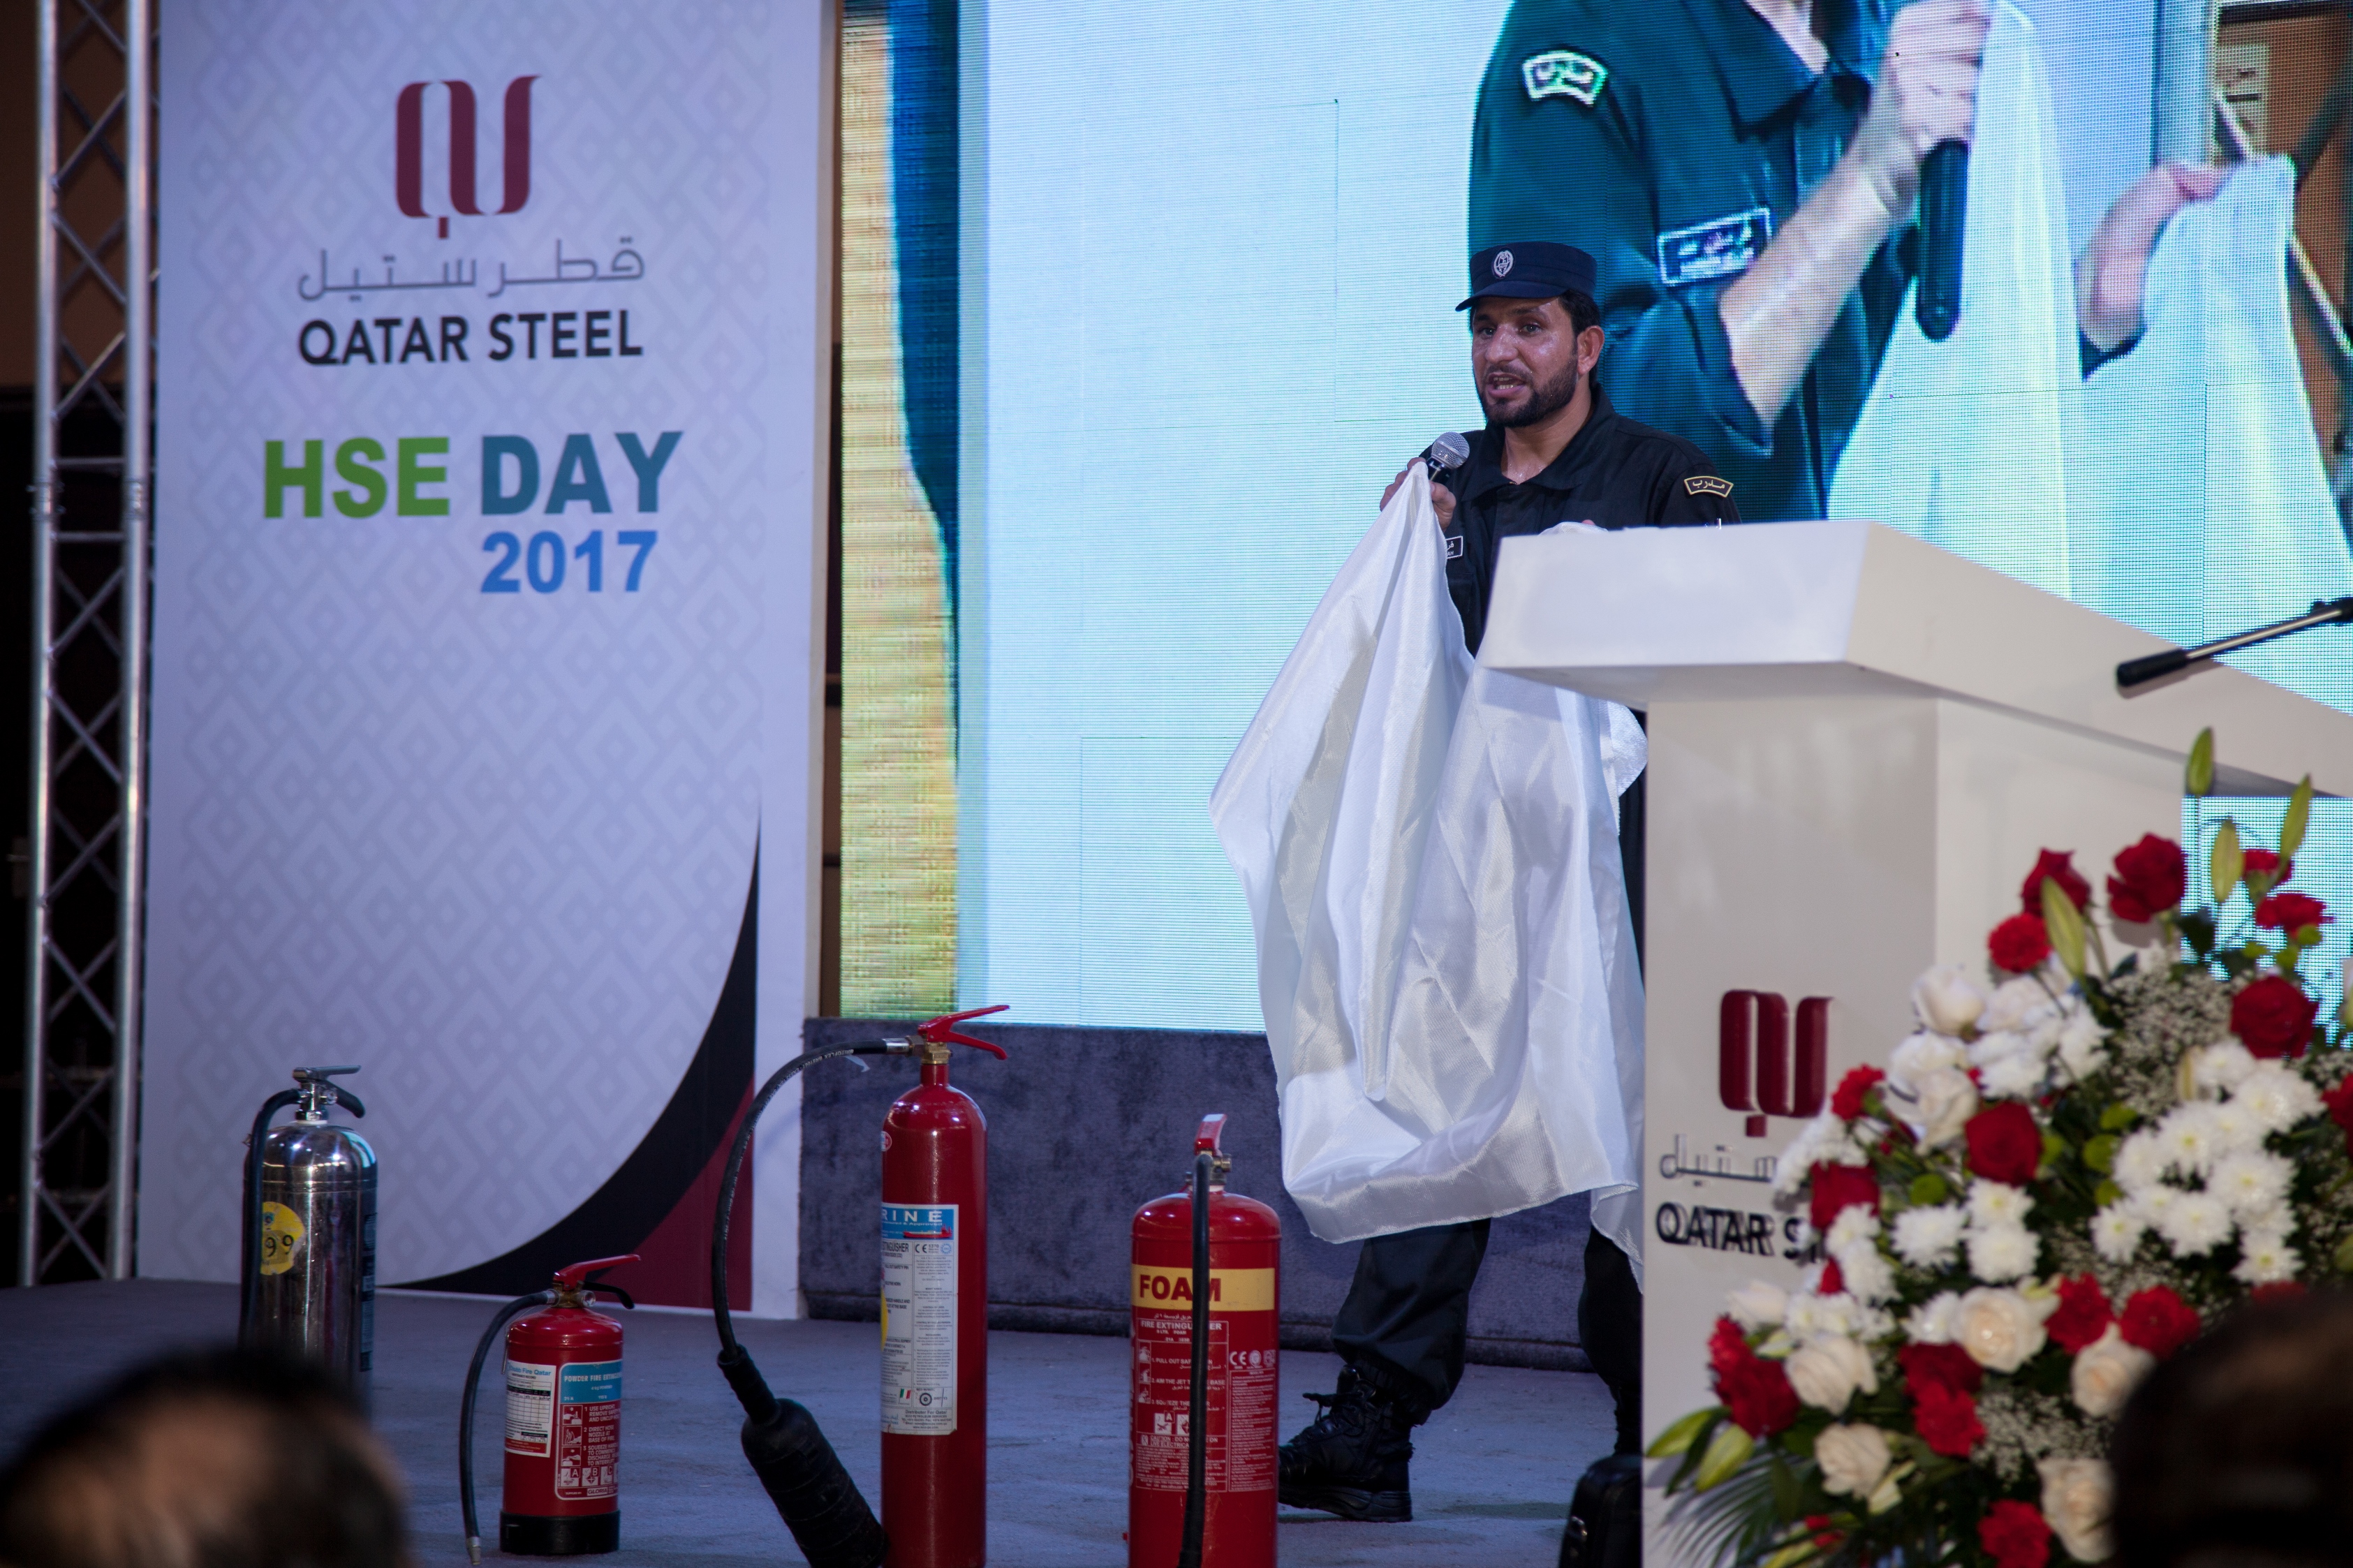 Qatar Steel Celebrates HSE Day